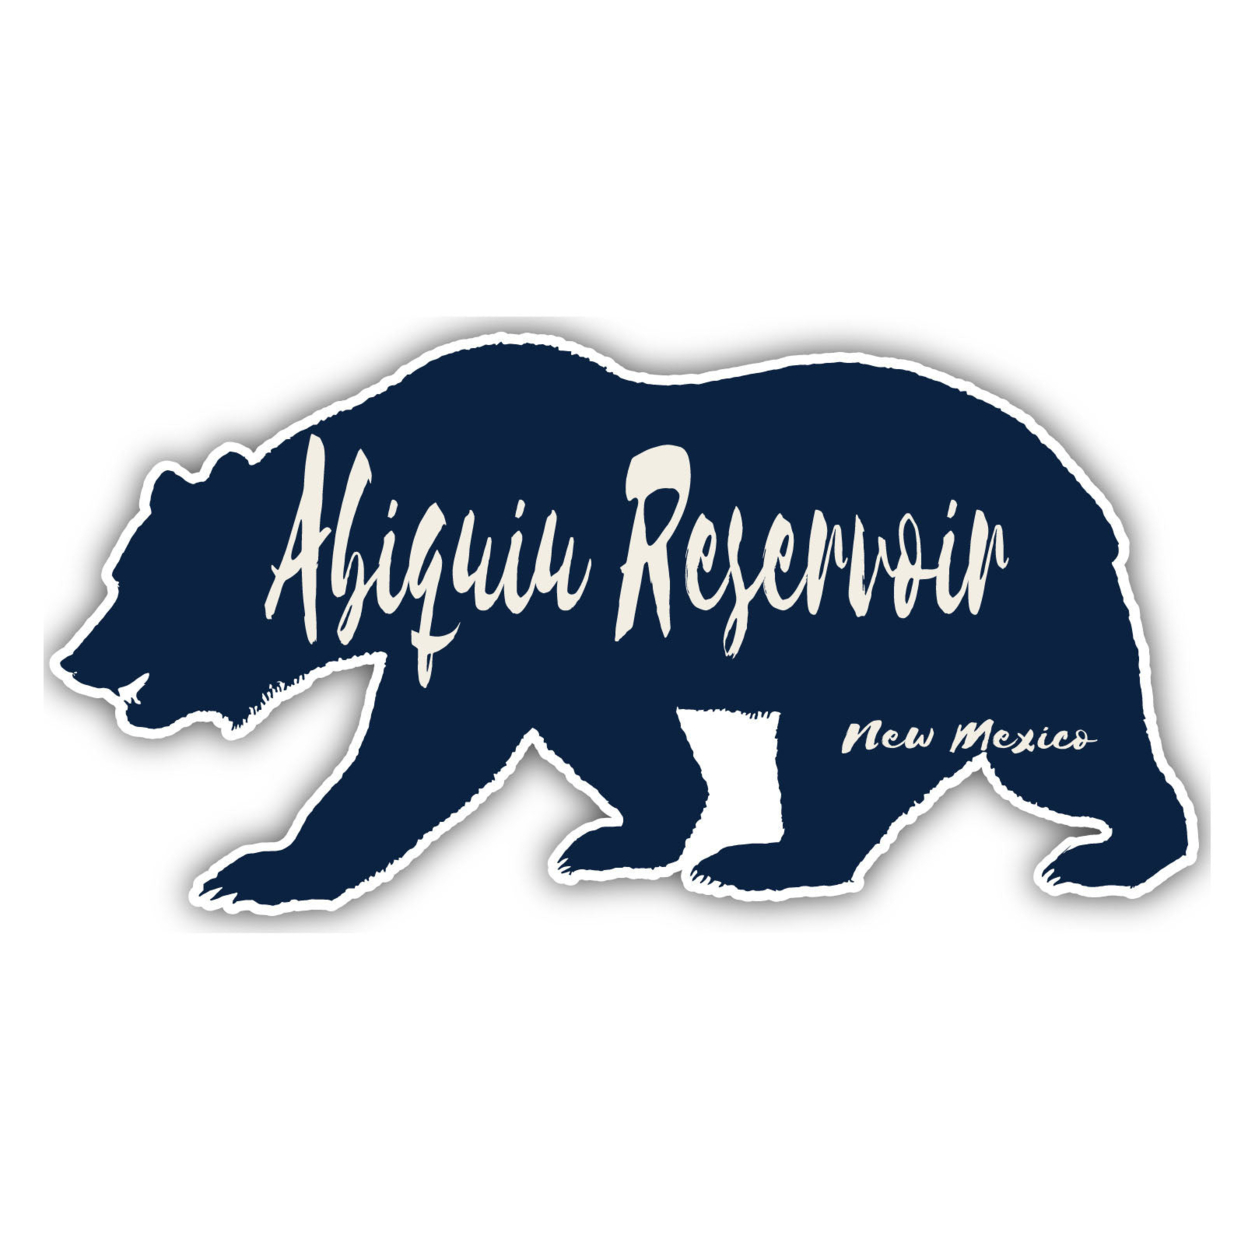 Abiquiu Reservoir New Mexico Souvenir Decorative Stickers (Choose Theme And Size) - 4-Pack, 2-Inch, Bear